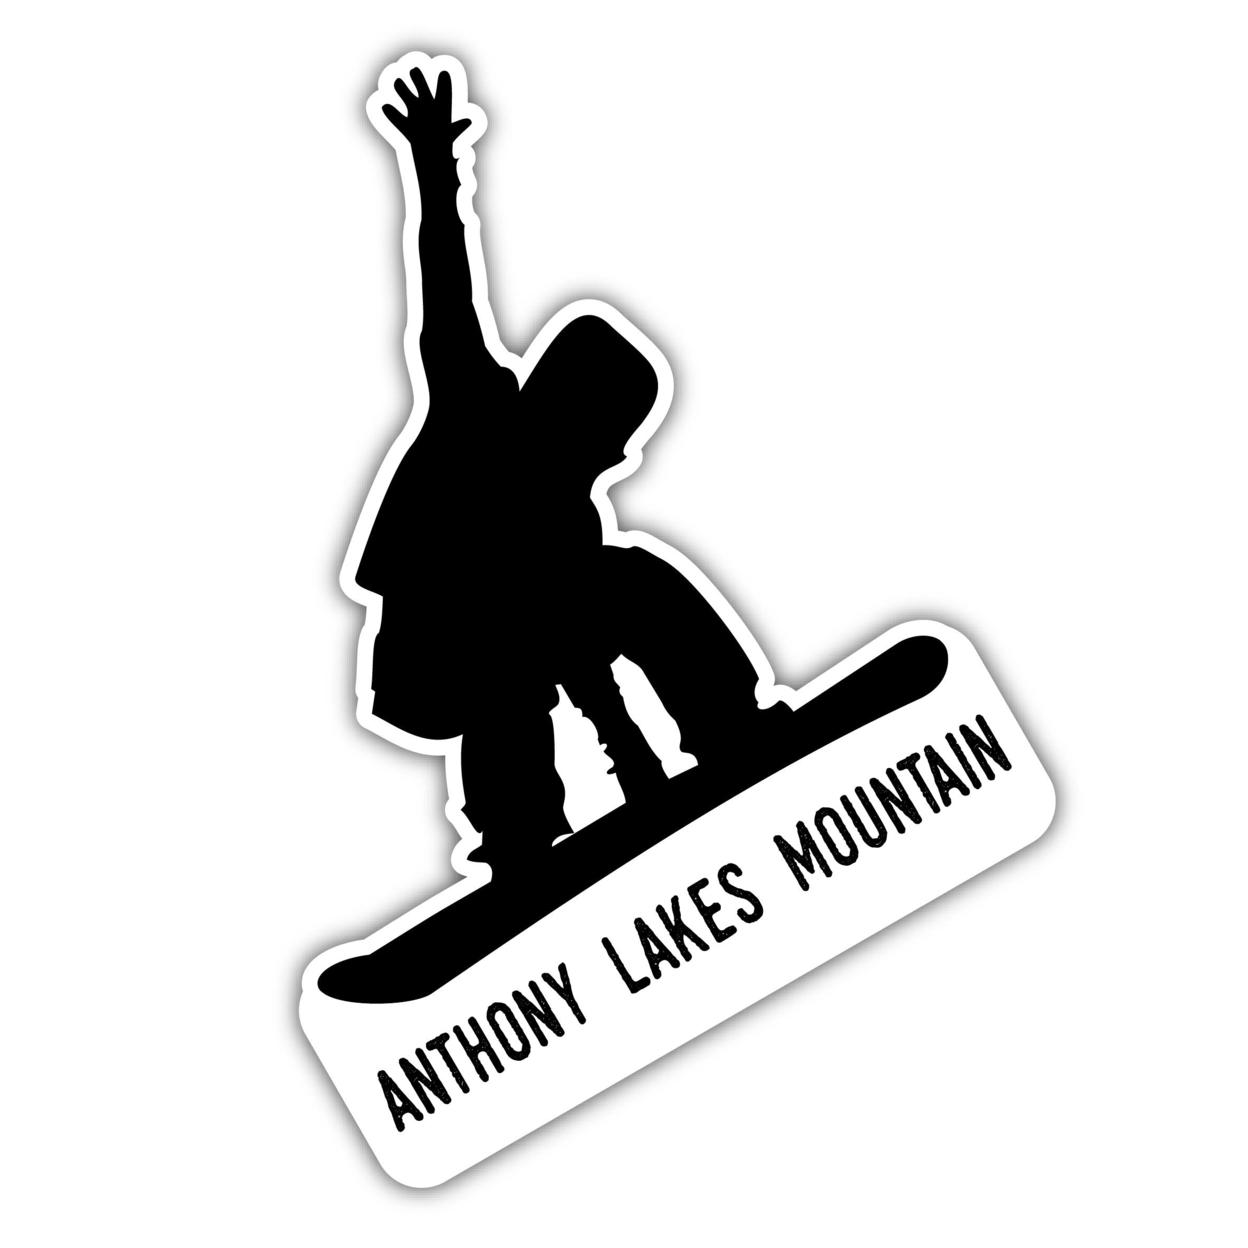 Anthony Lakes Mountain Oregon Ski Adventures Souvenir 4 Inch Vinyl Decal Sticker Board Design